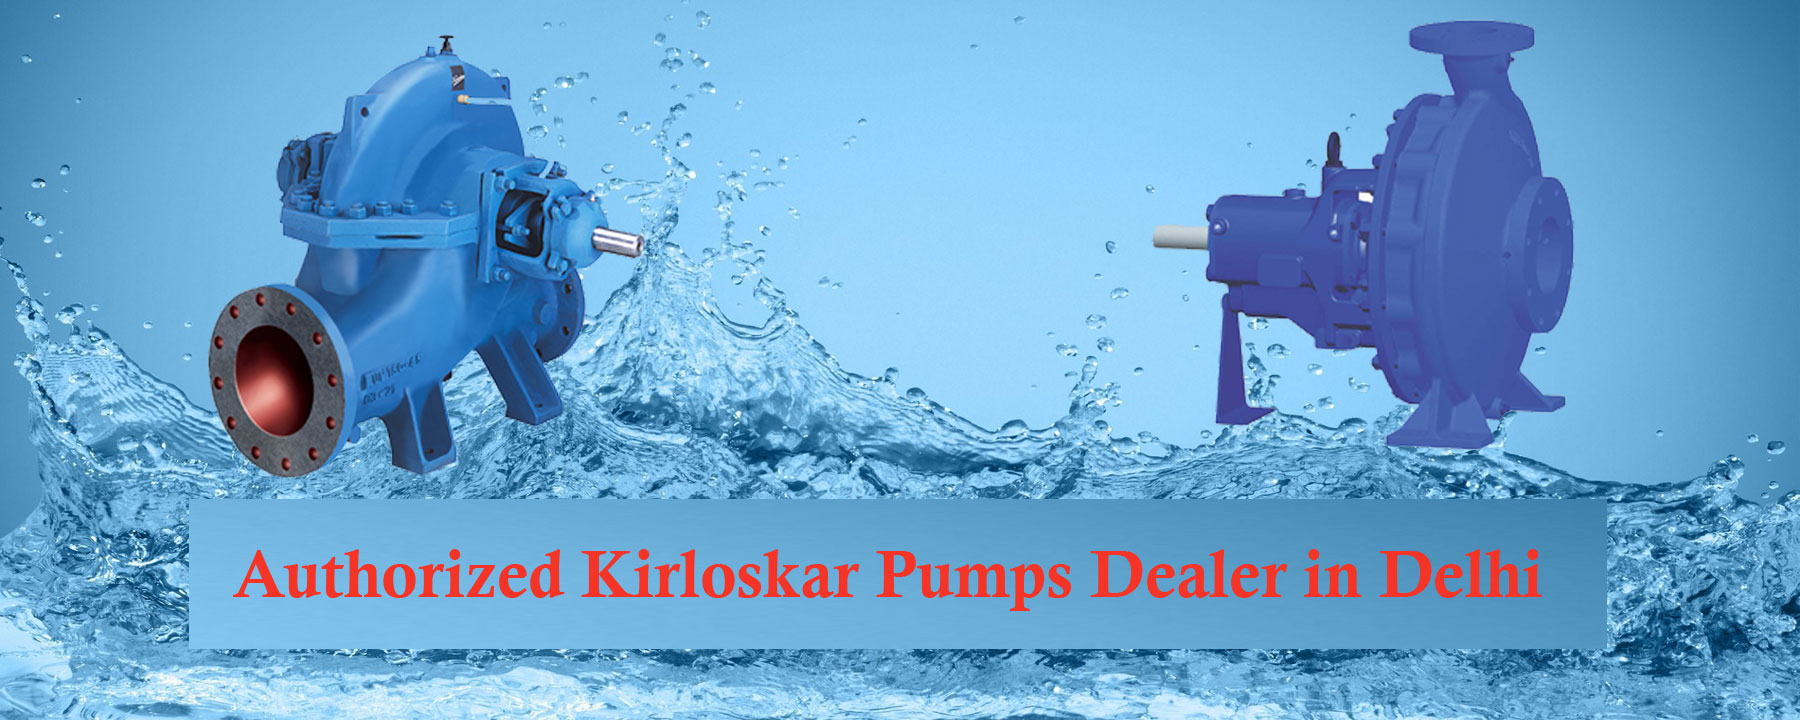 Authorized Kirloskar Pumps Dealer in Delhi 